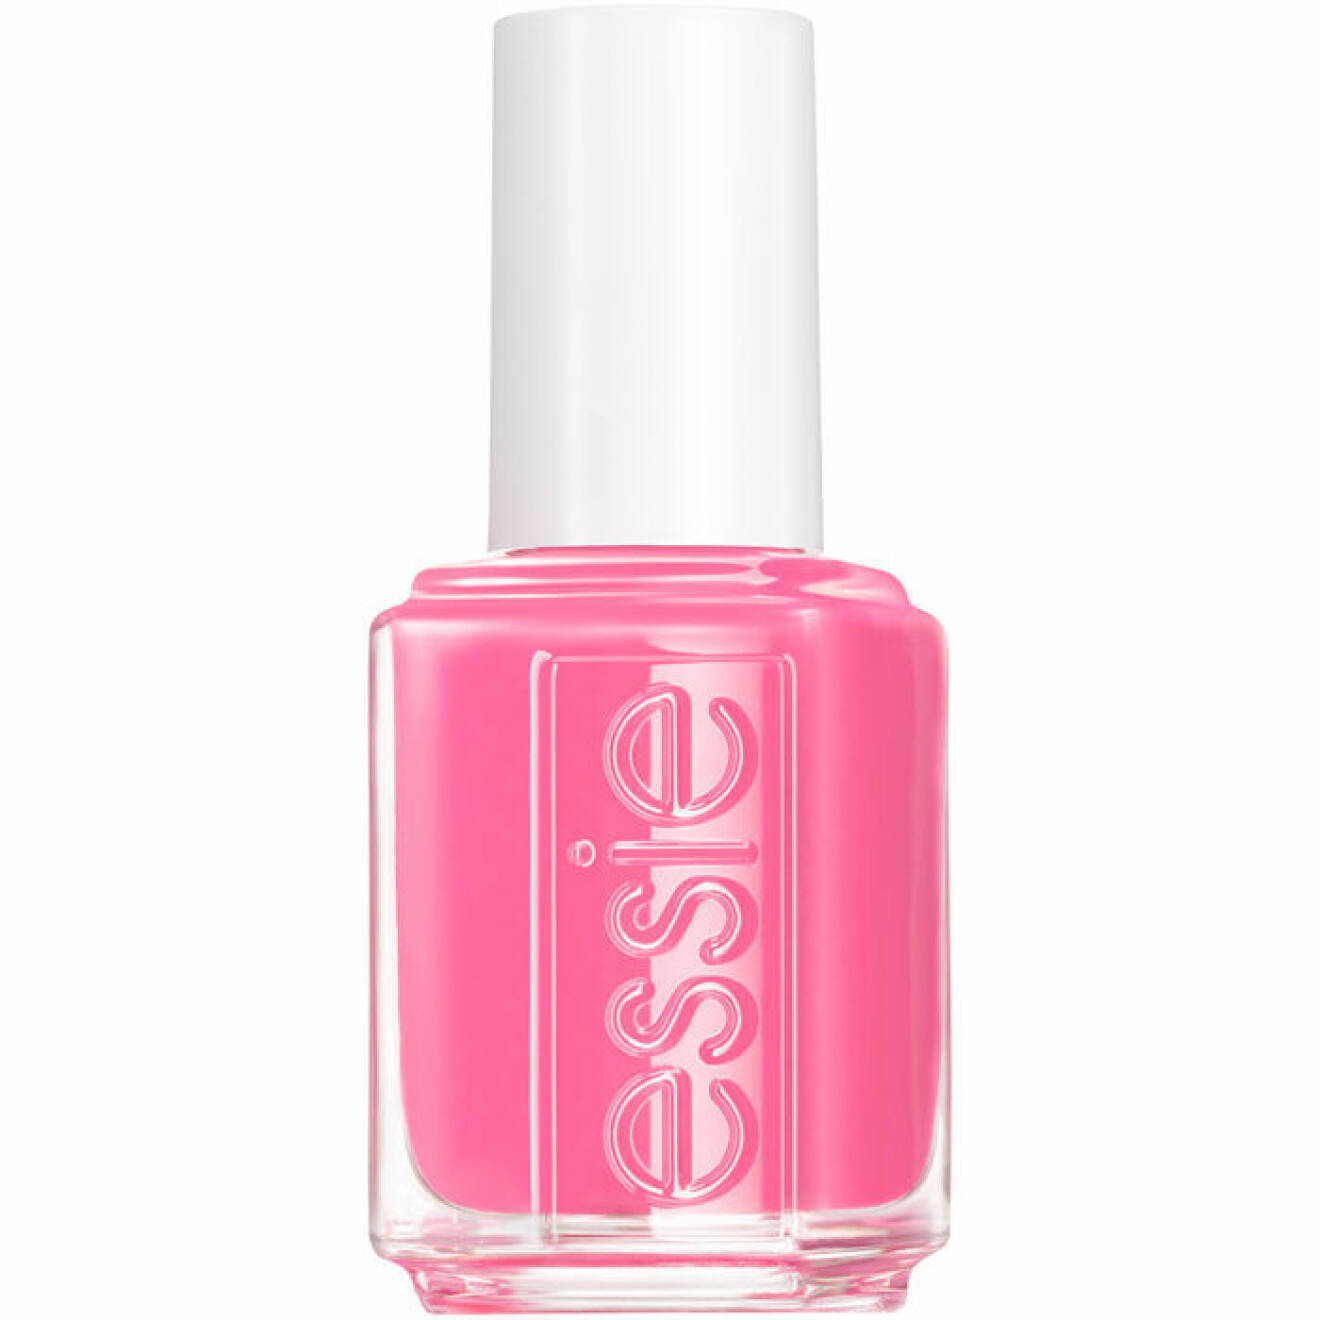 Rosa nagellack från Essie